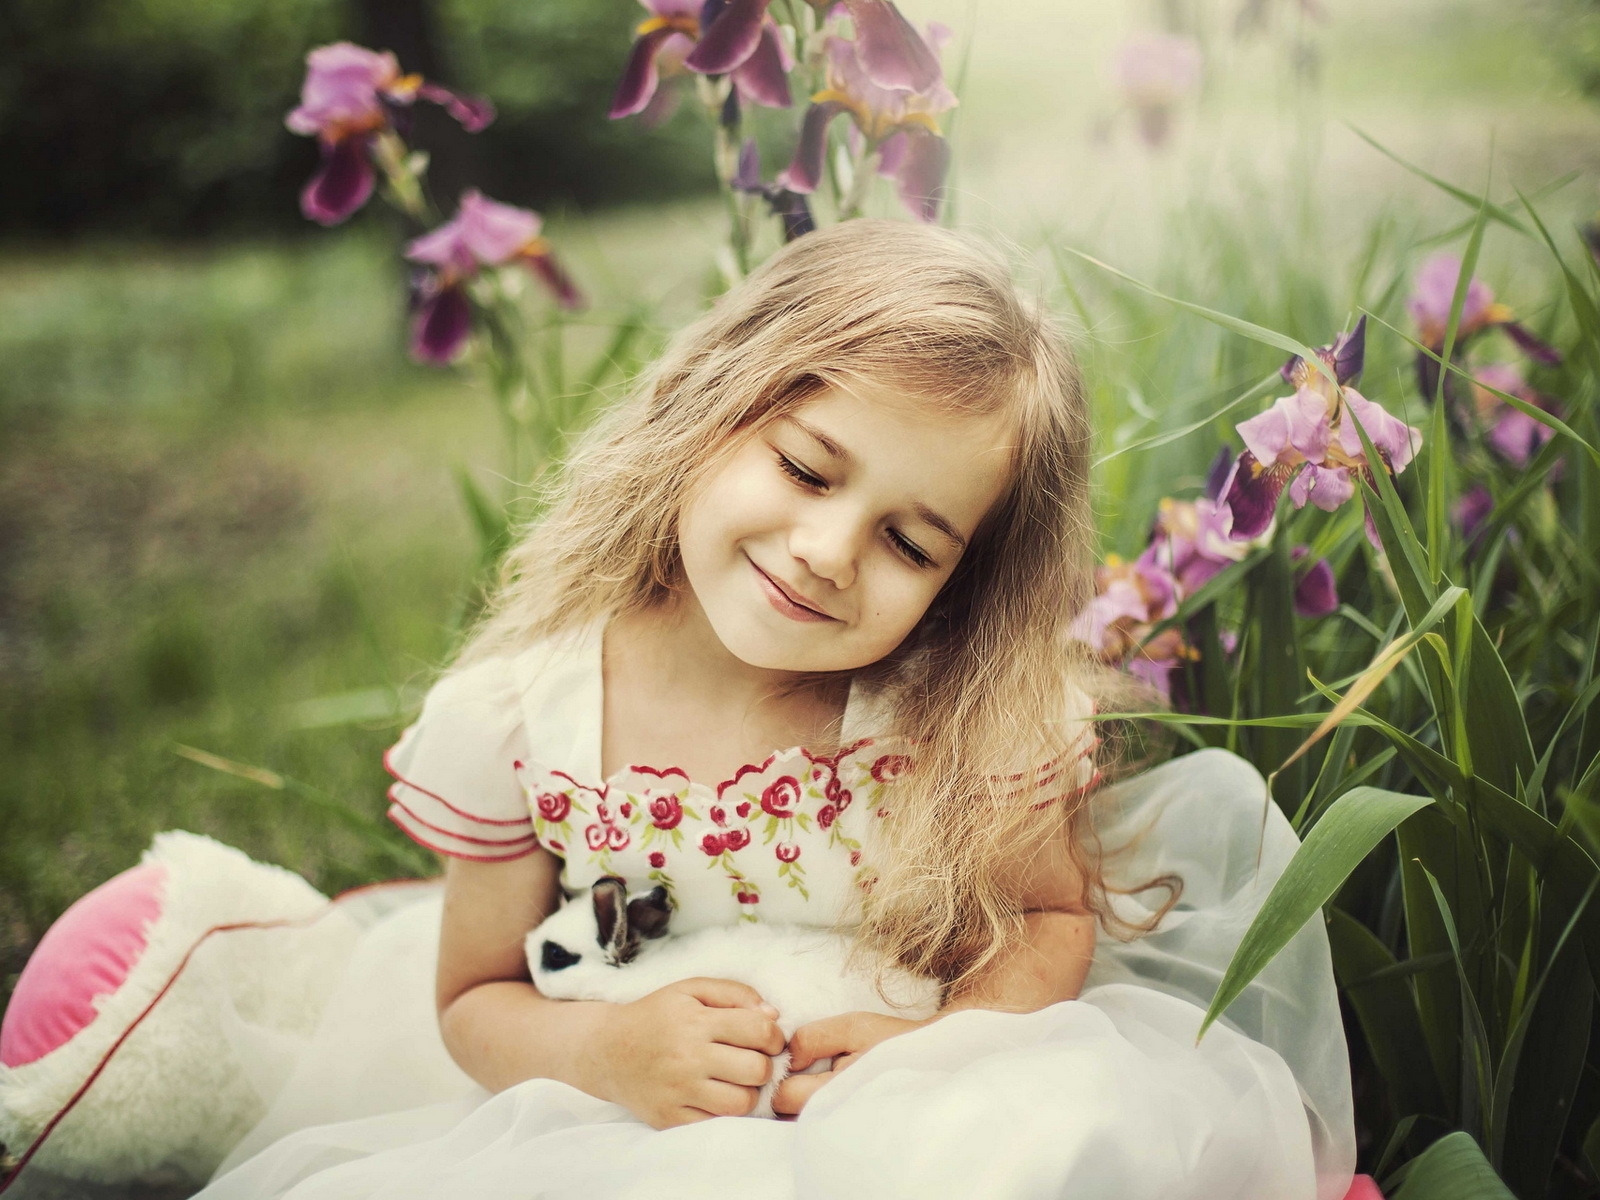 Image: Girl, dress, keep, rabbit, greens, nature, mood